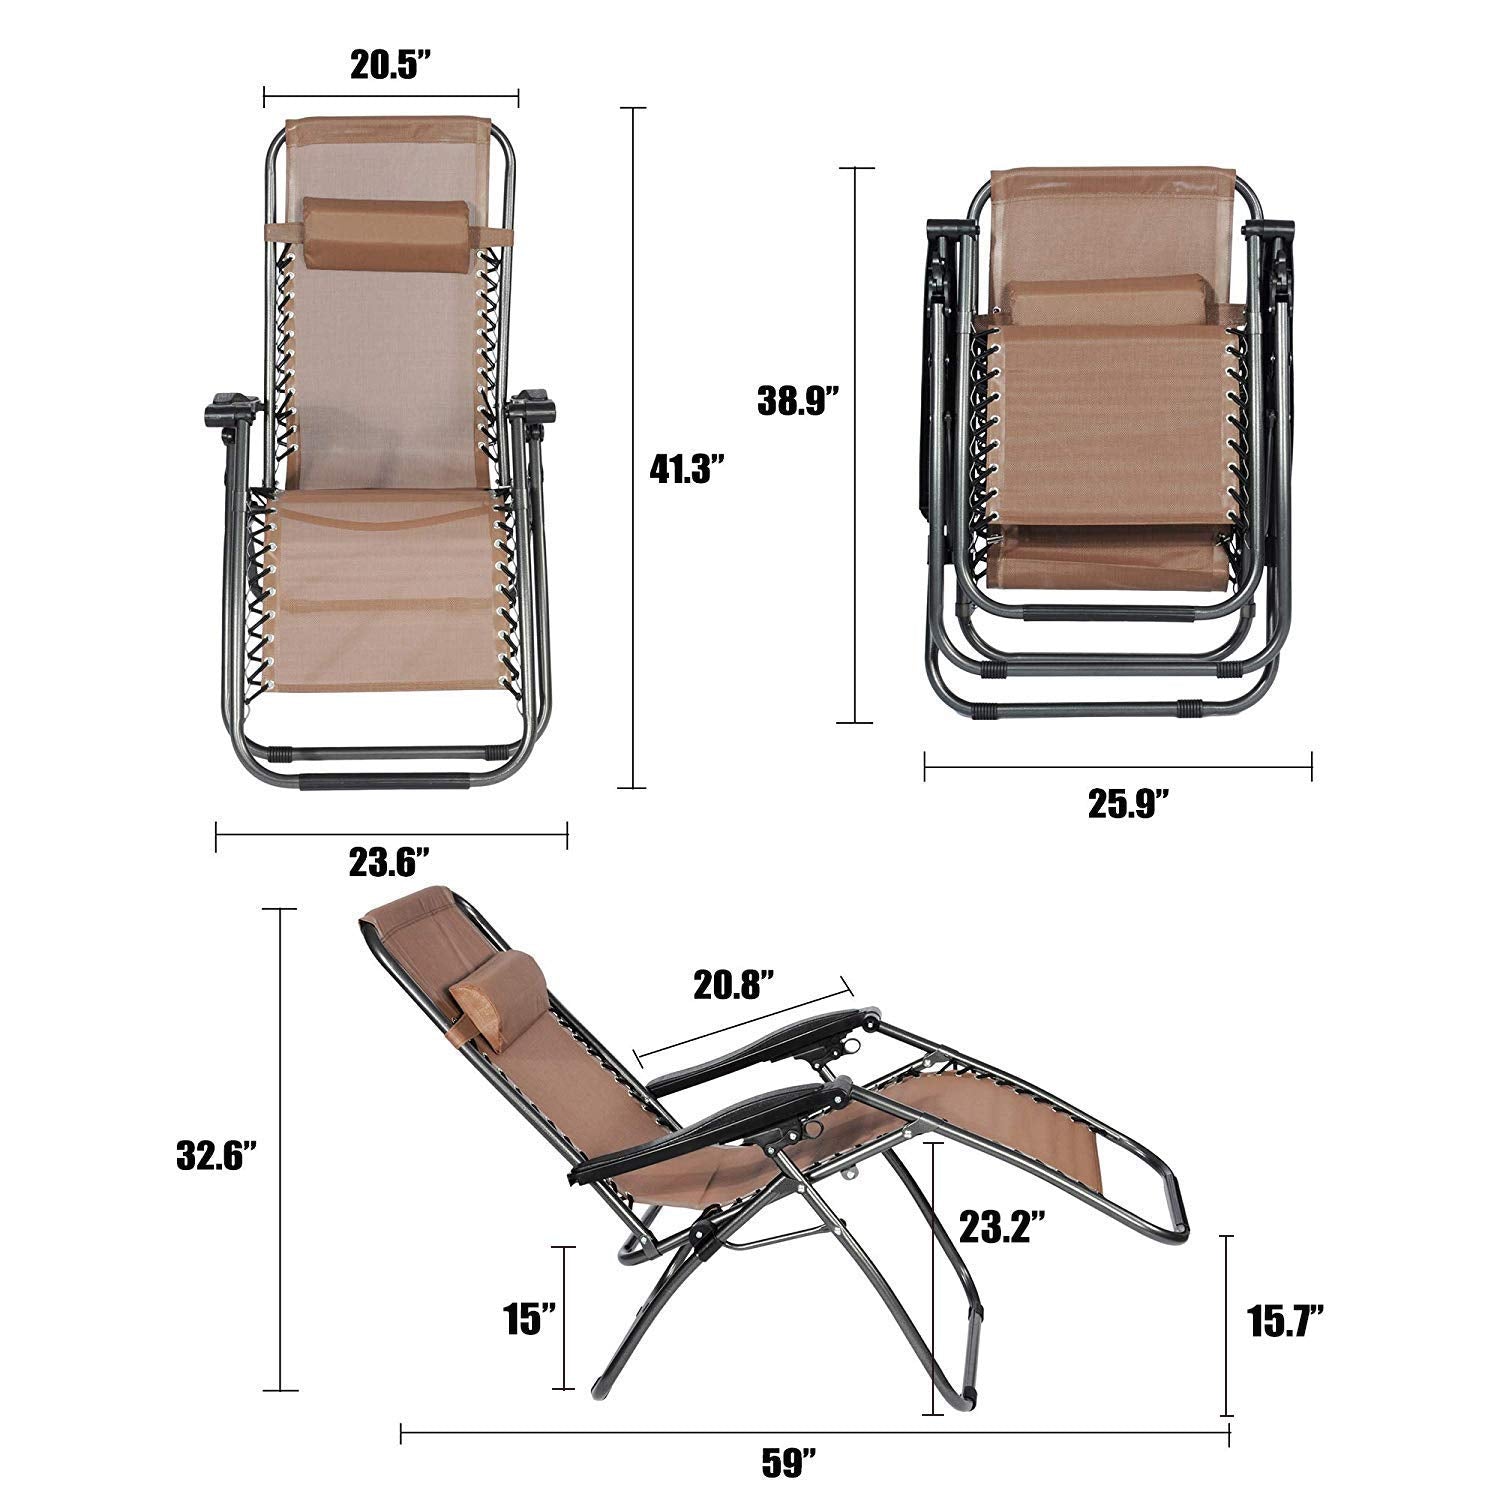 Bosonshop Zero Gravity Reclining Lounge Patio Chairs, 2PC, Brown